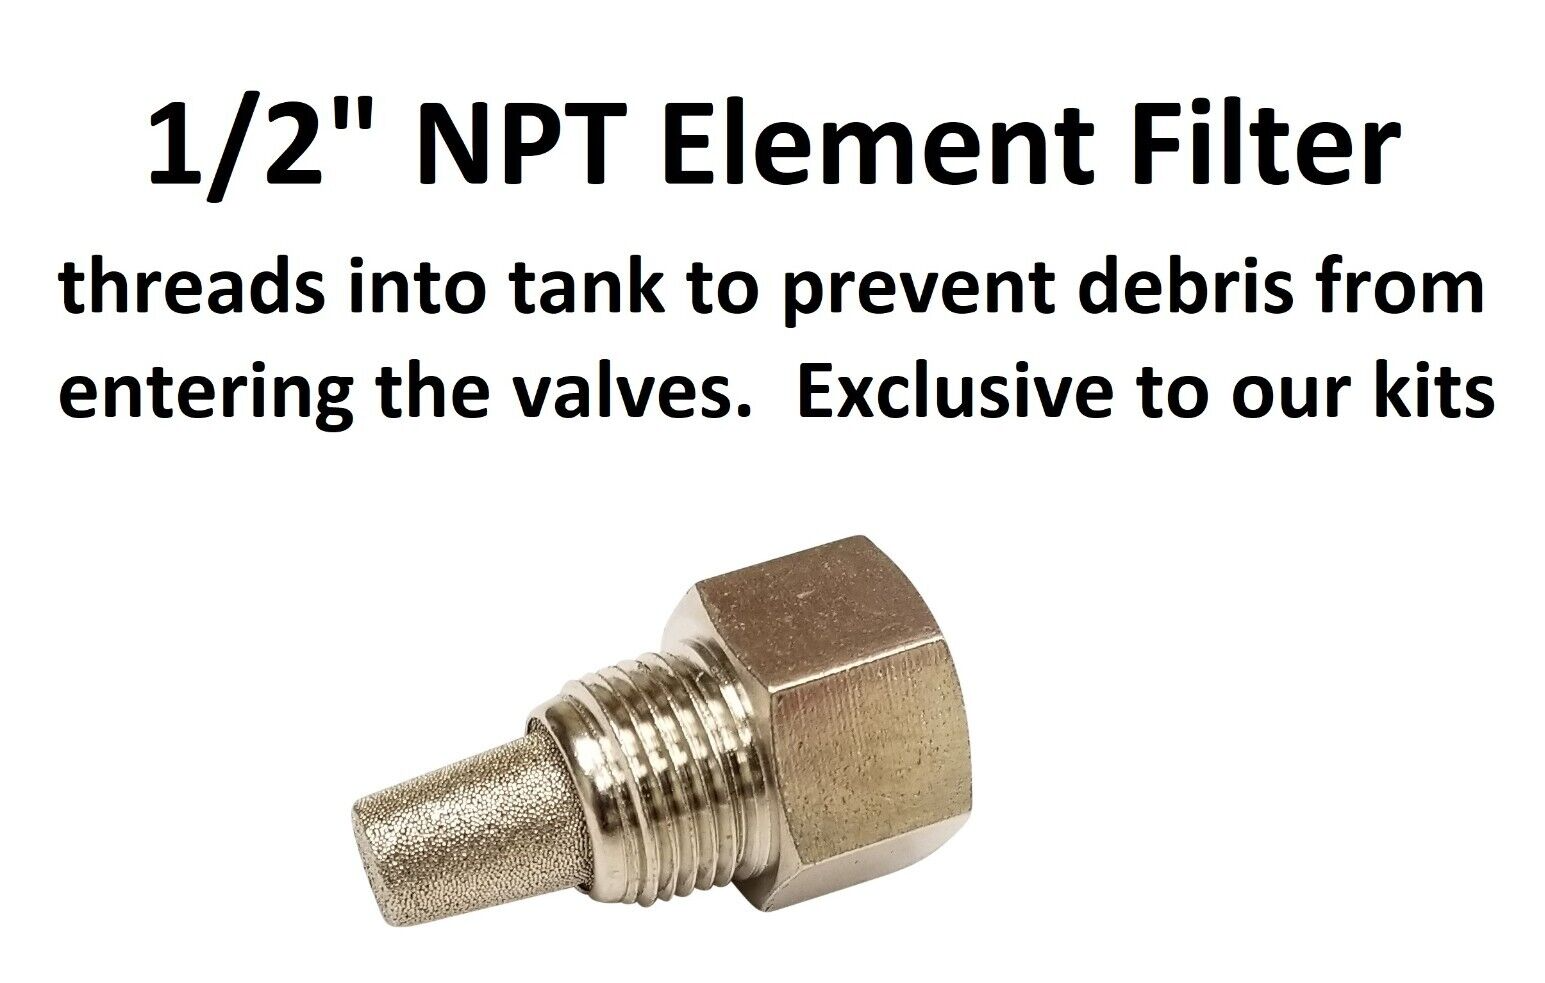 npt element filter